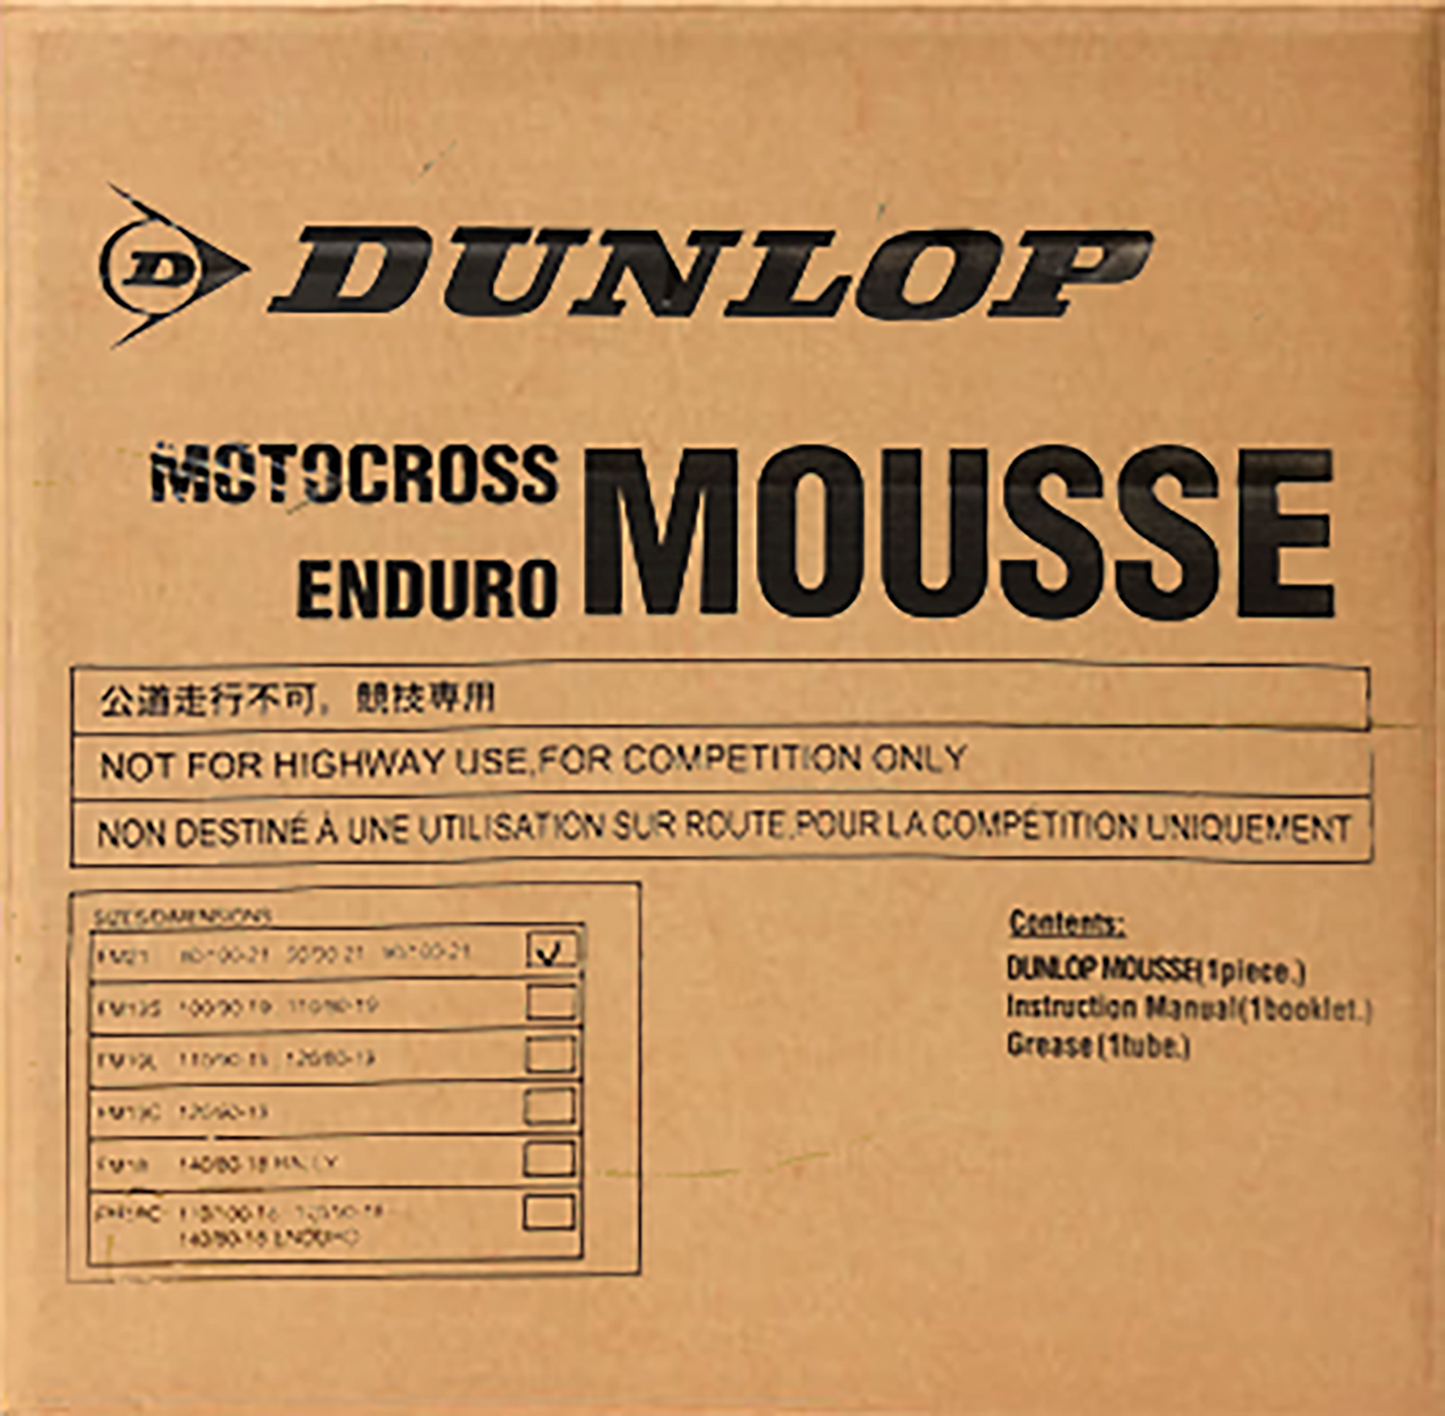 DUNLOP Mousse Tube - 140/80-18 76760002